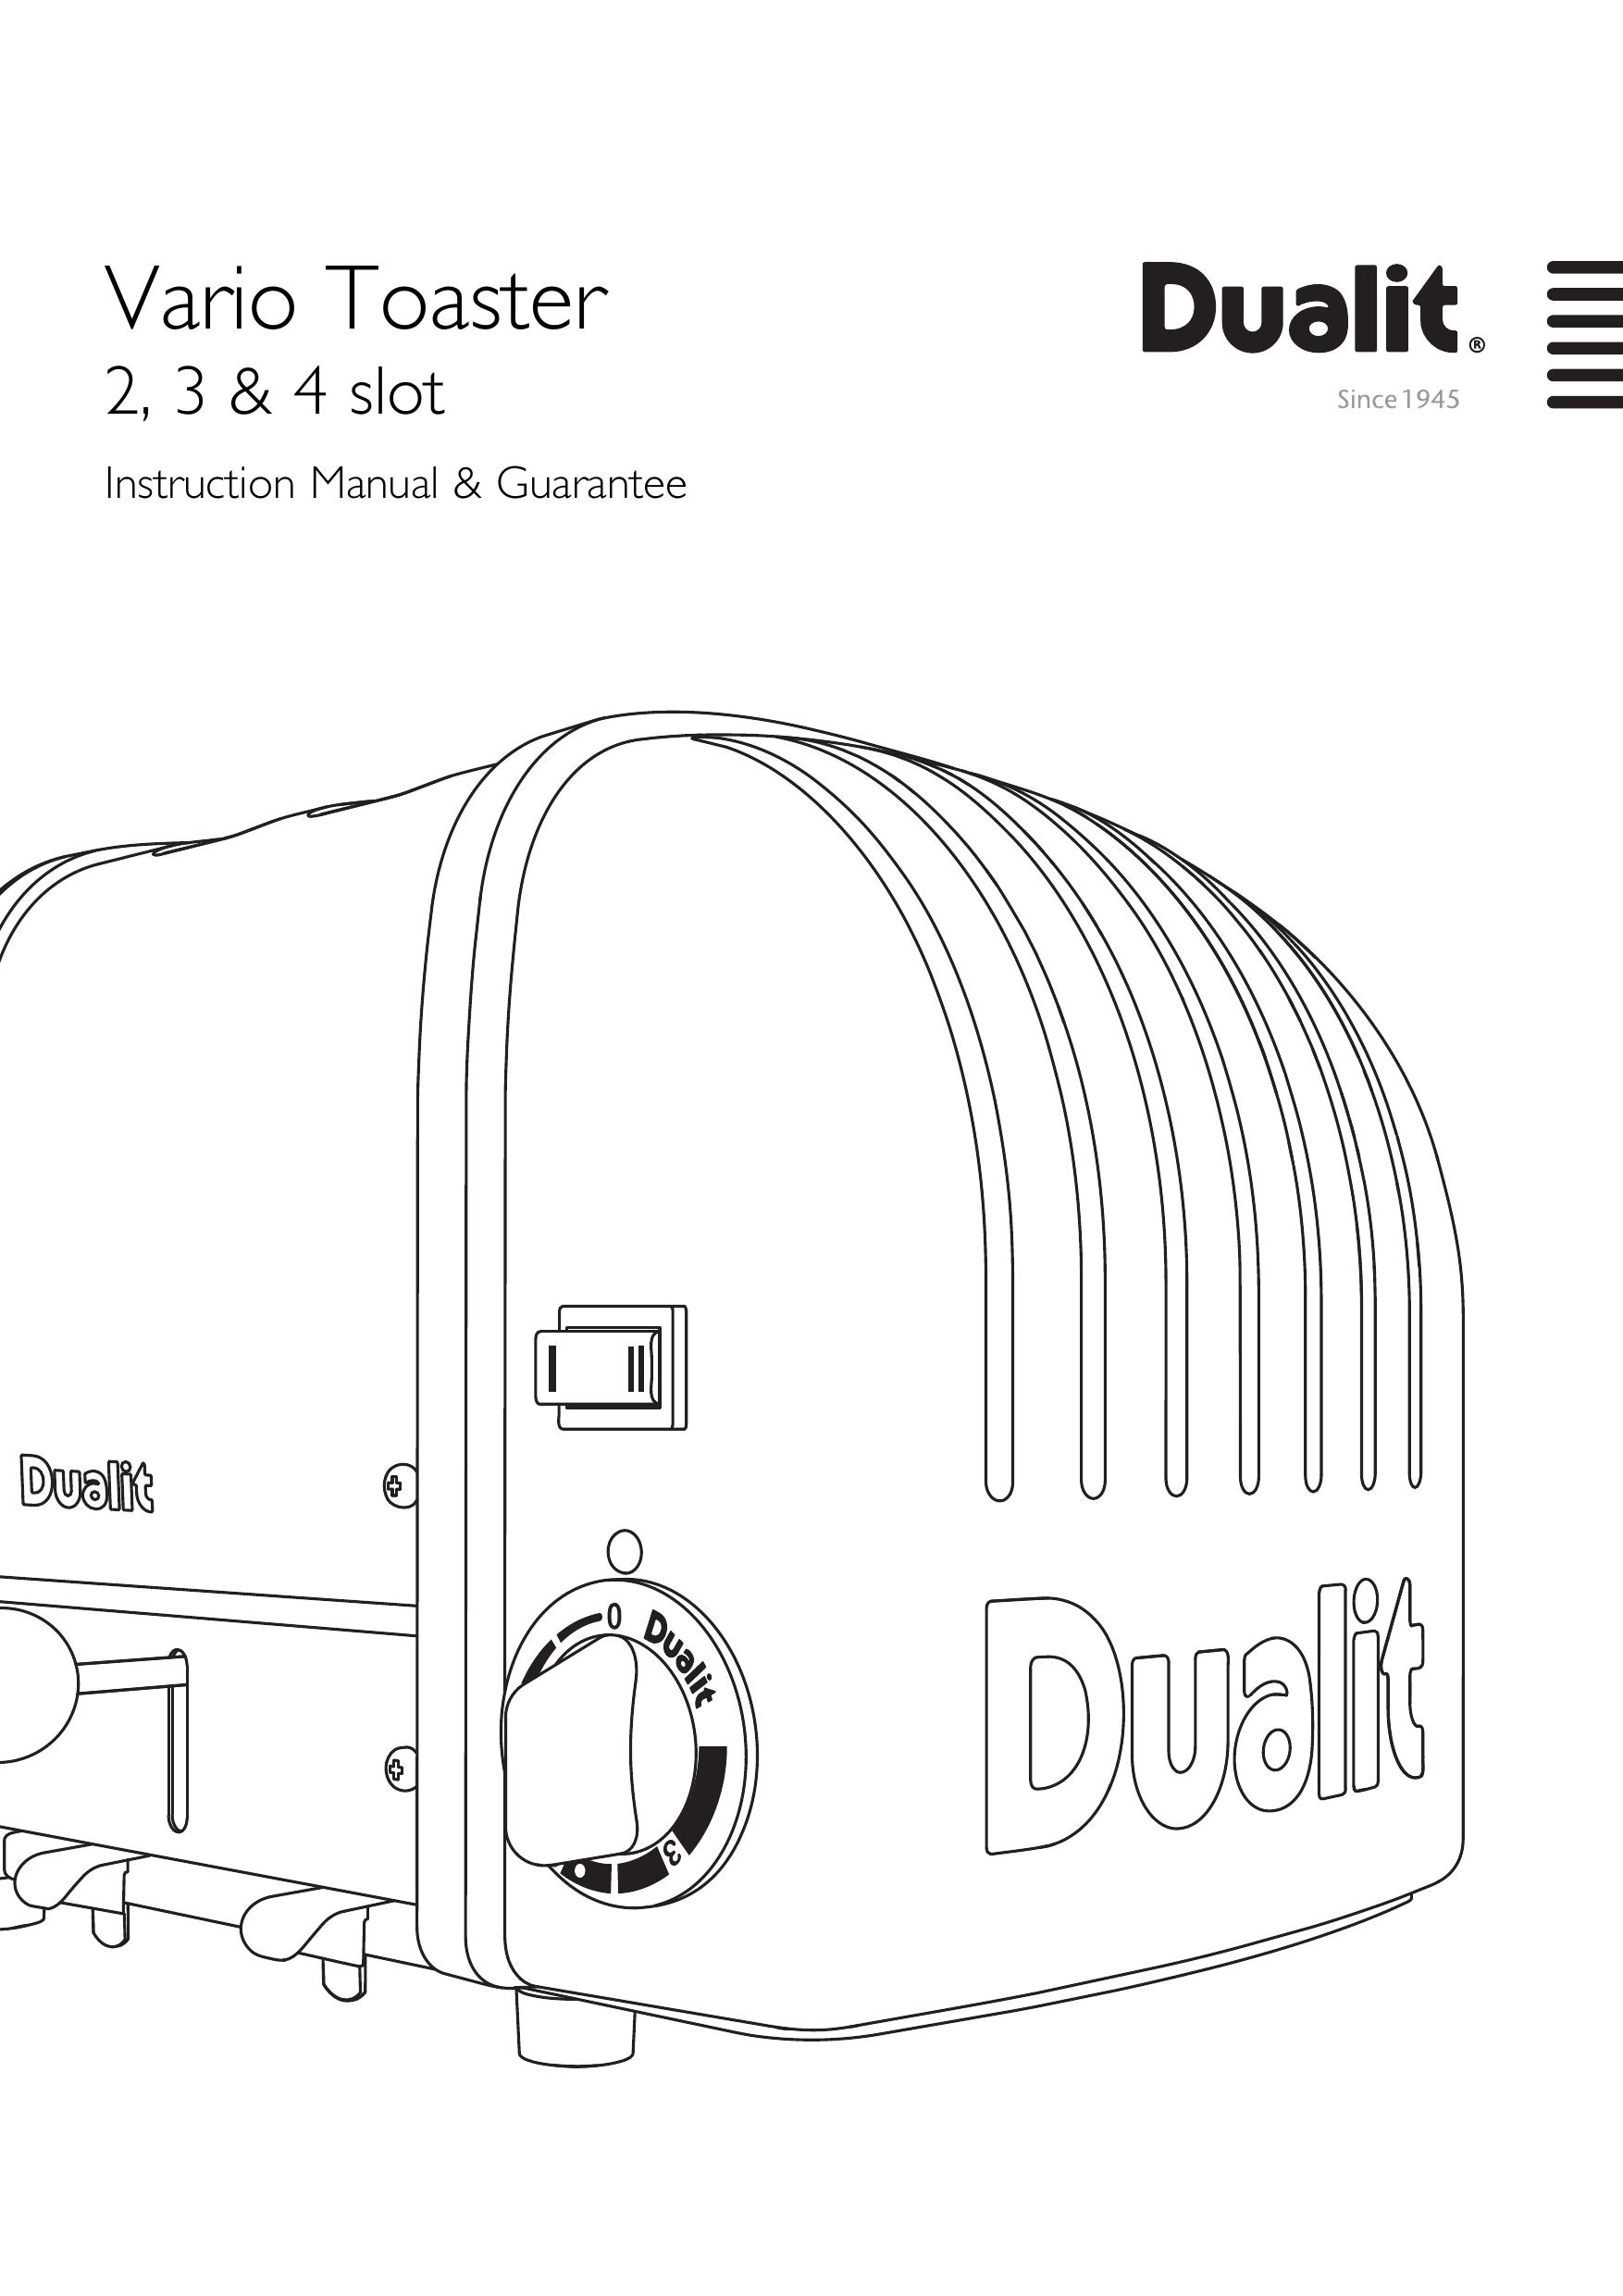 Dualit 27171 Toaster User Manual